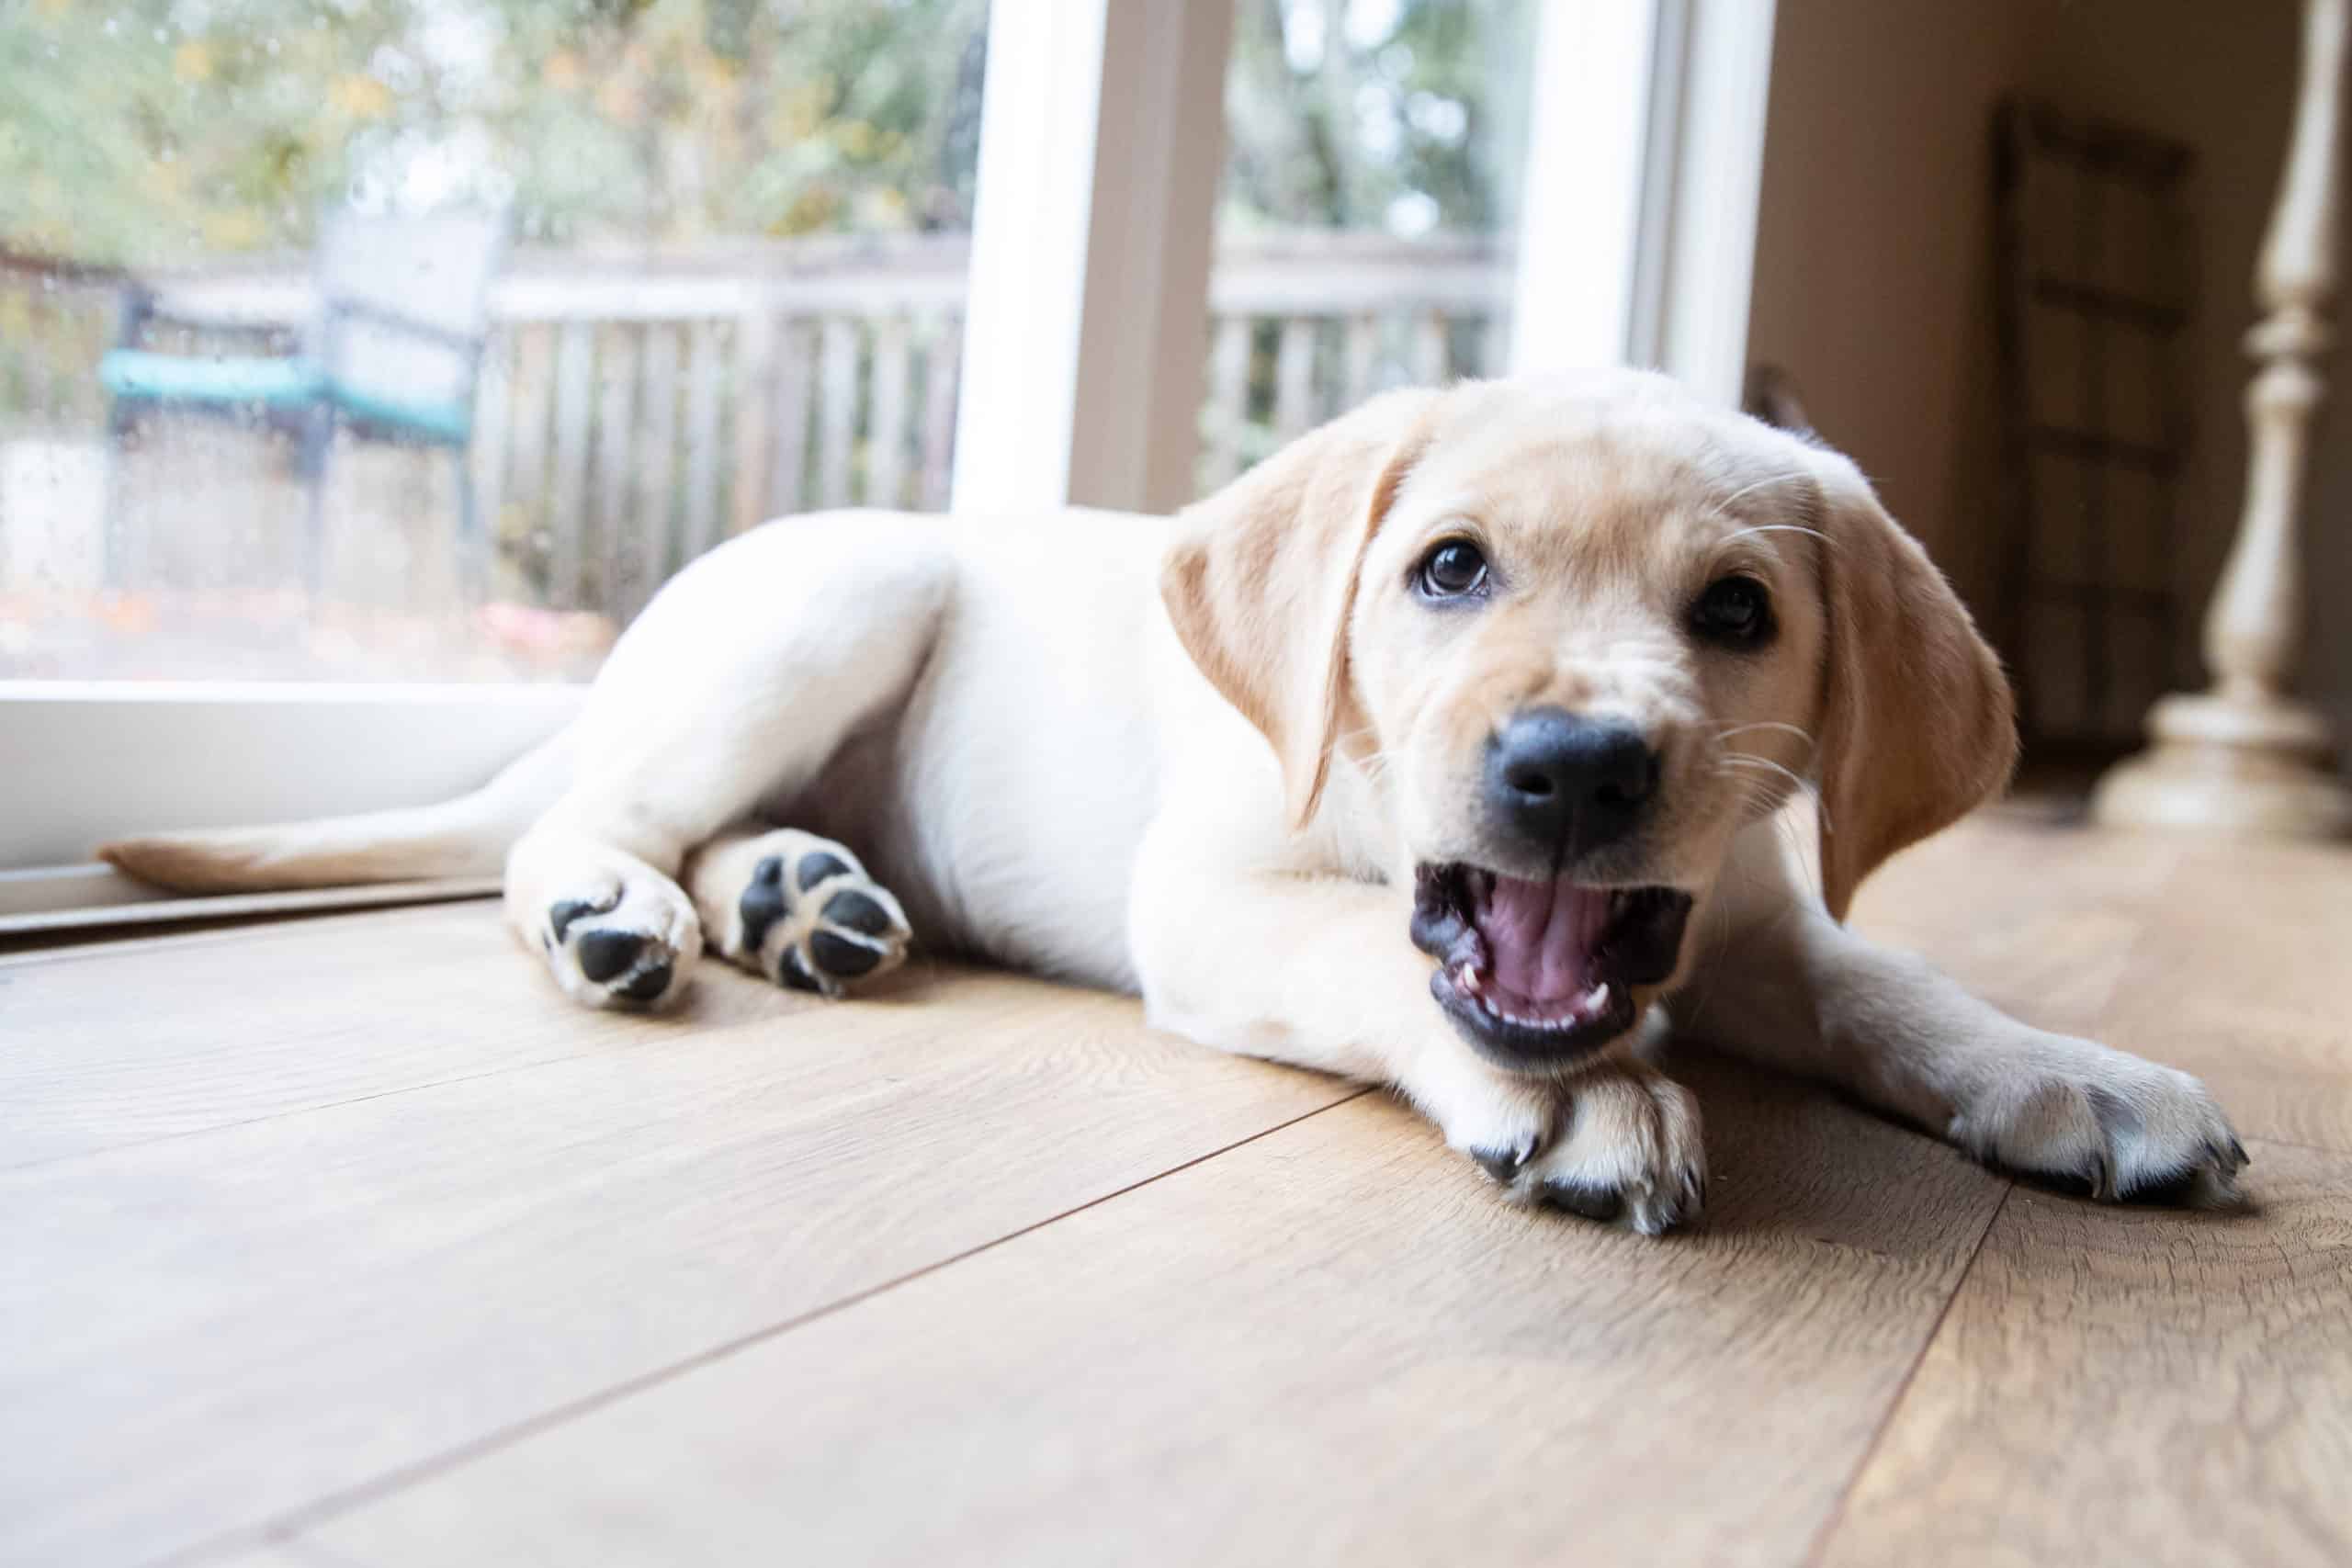 Cute young yellow labrador puppy